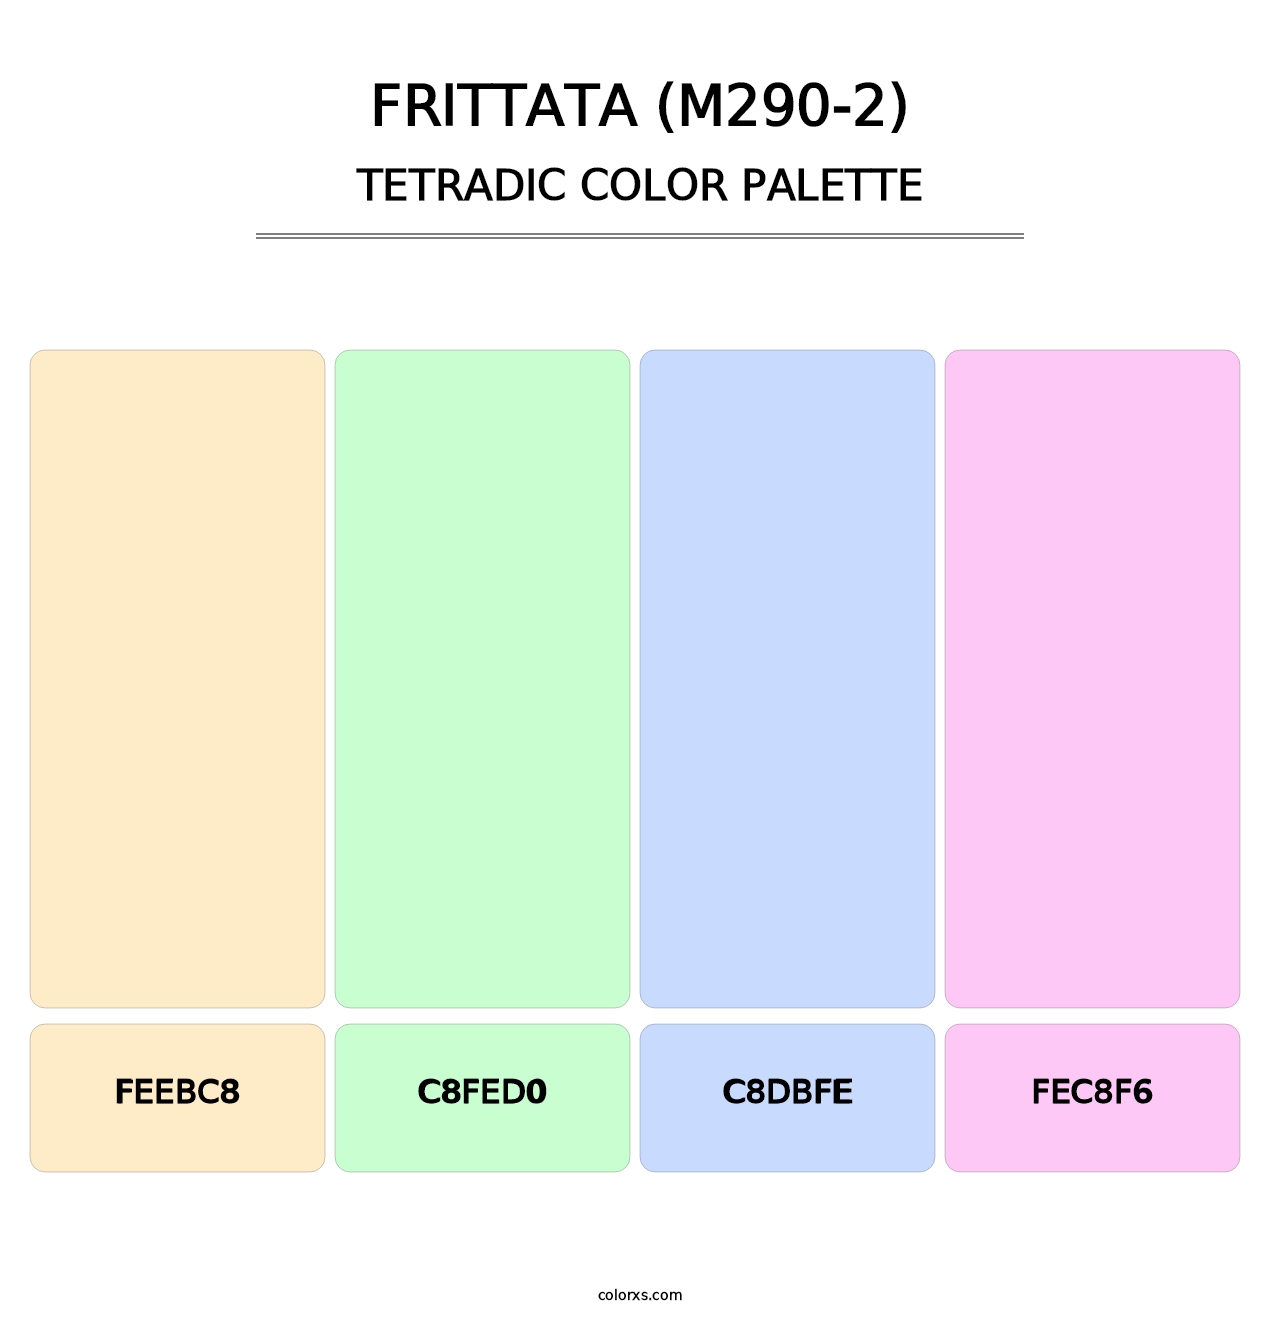 Frittata (M290-2) - Tetradic Color Palette